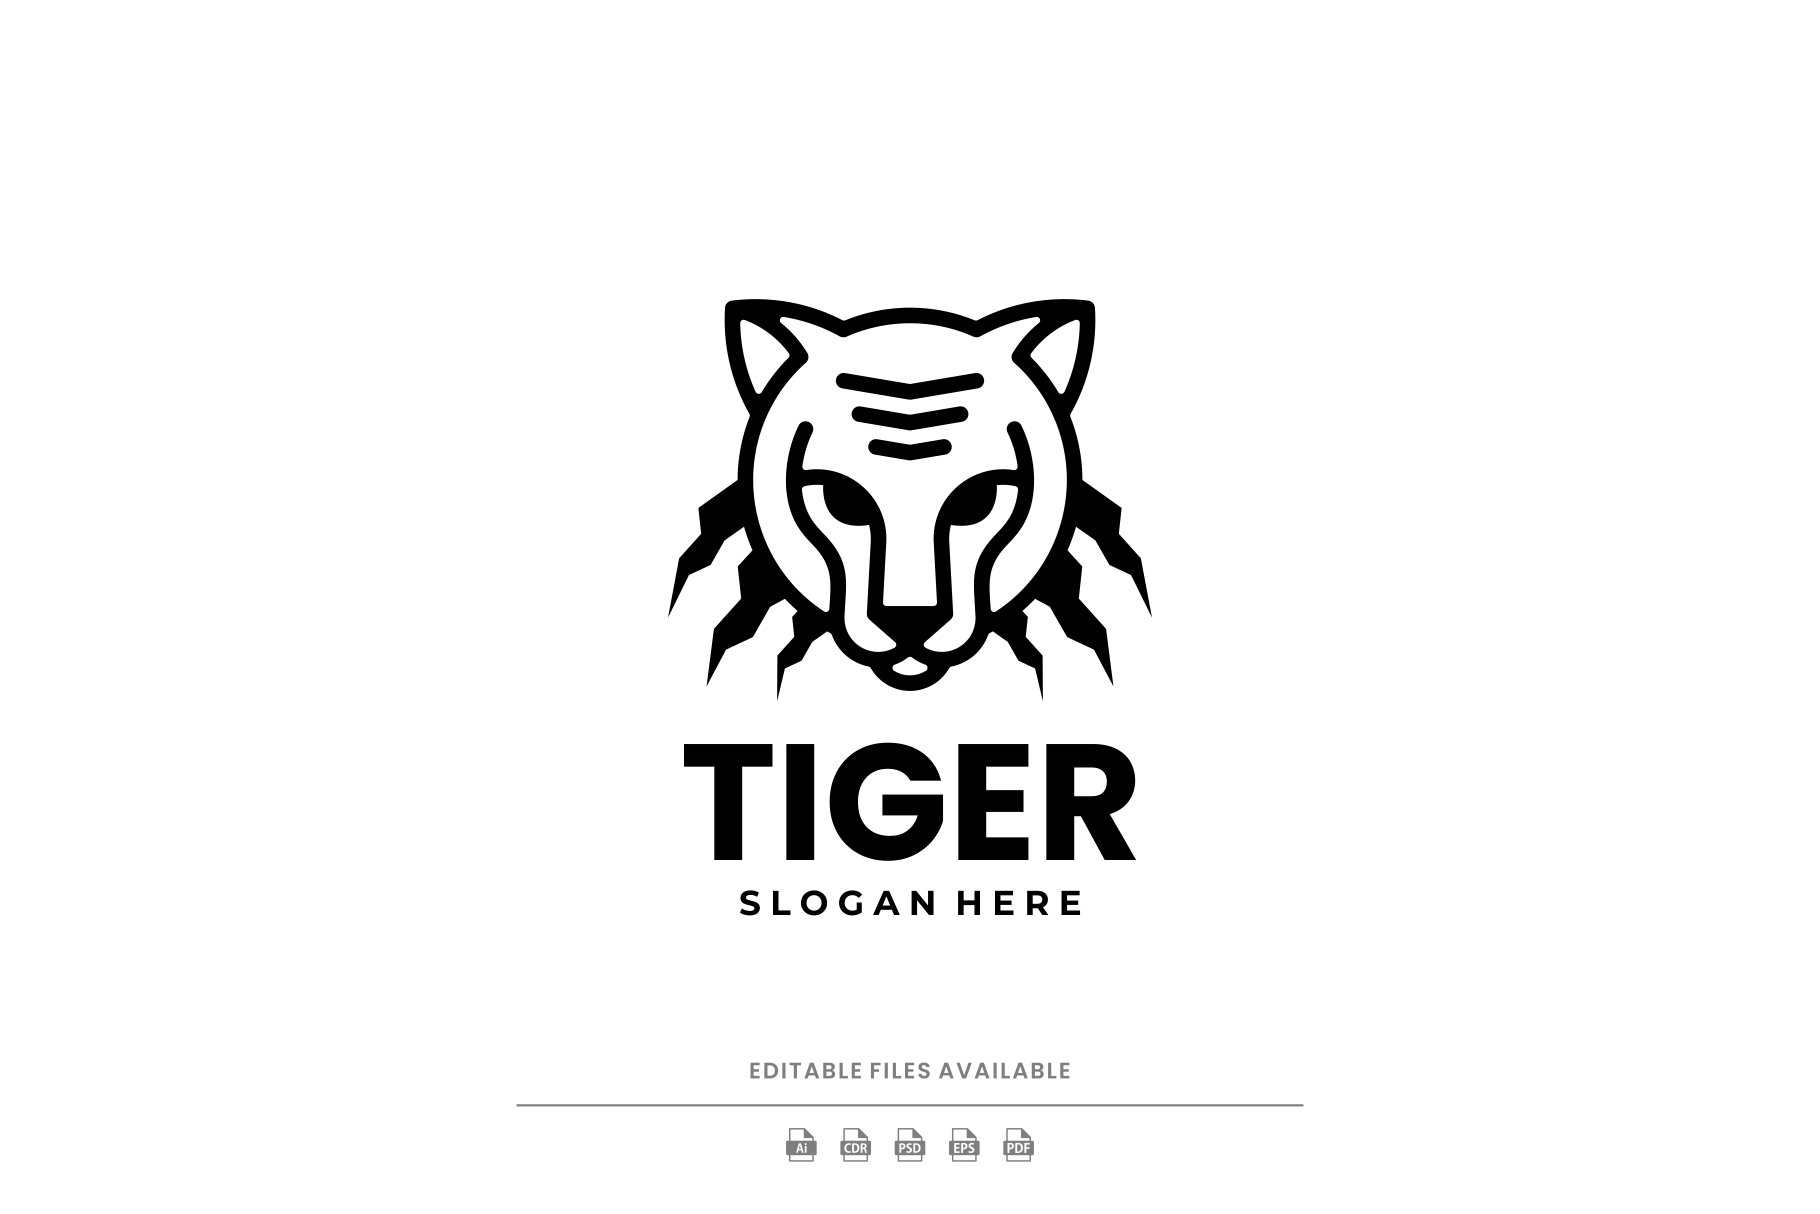 Tiger Line Art Logo cover image.